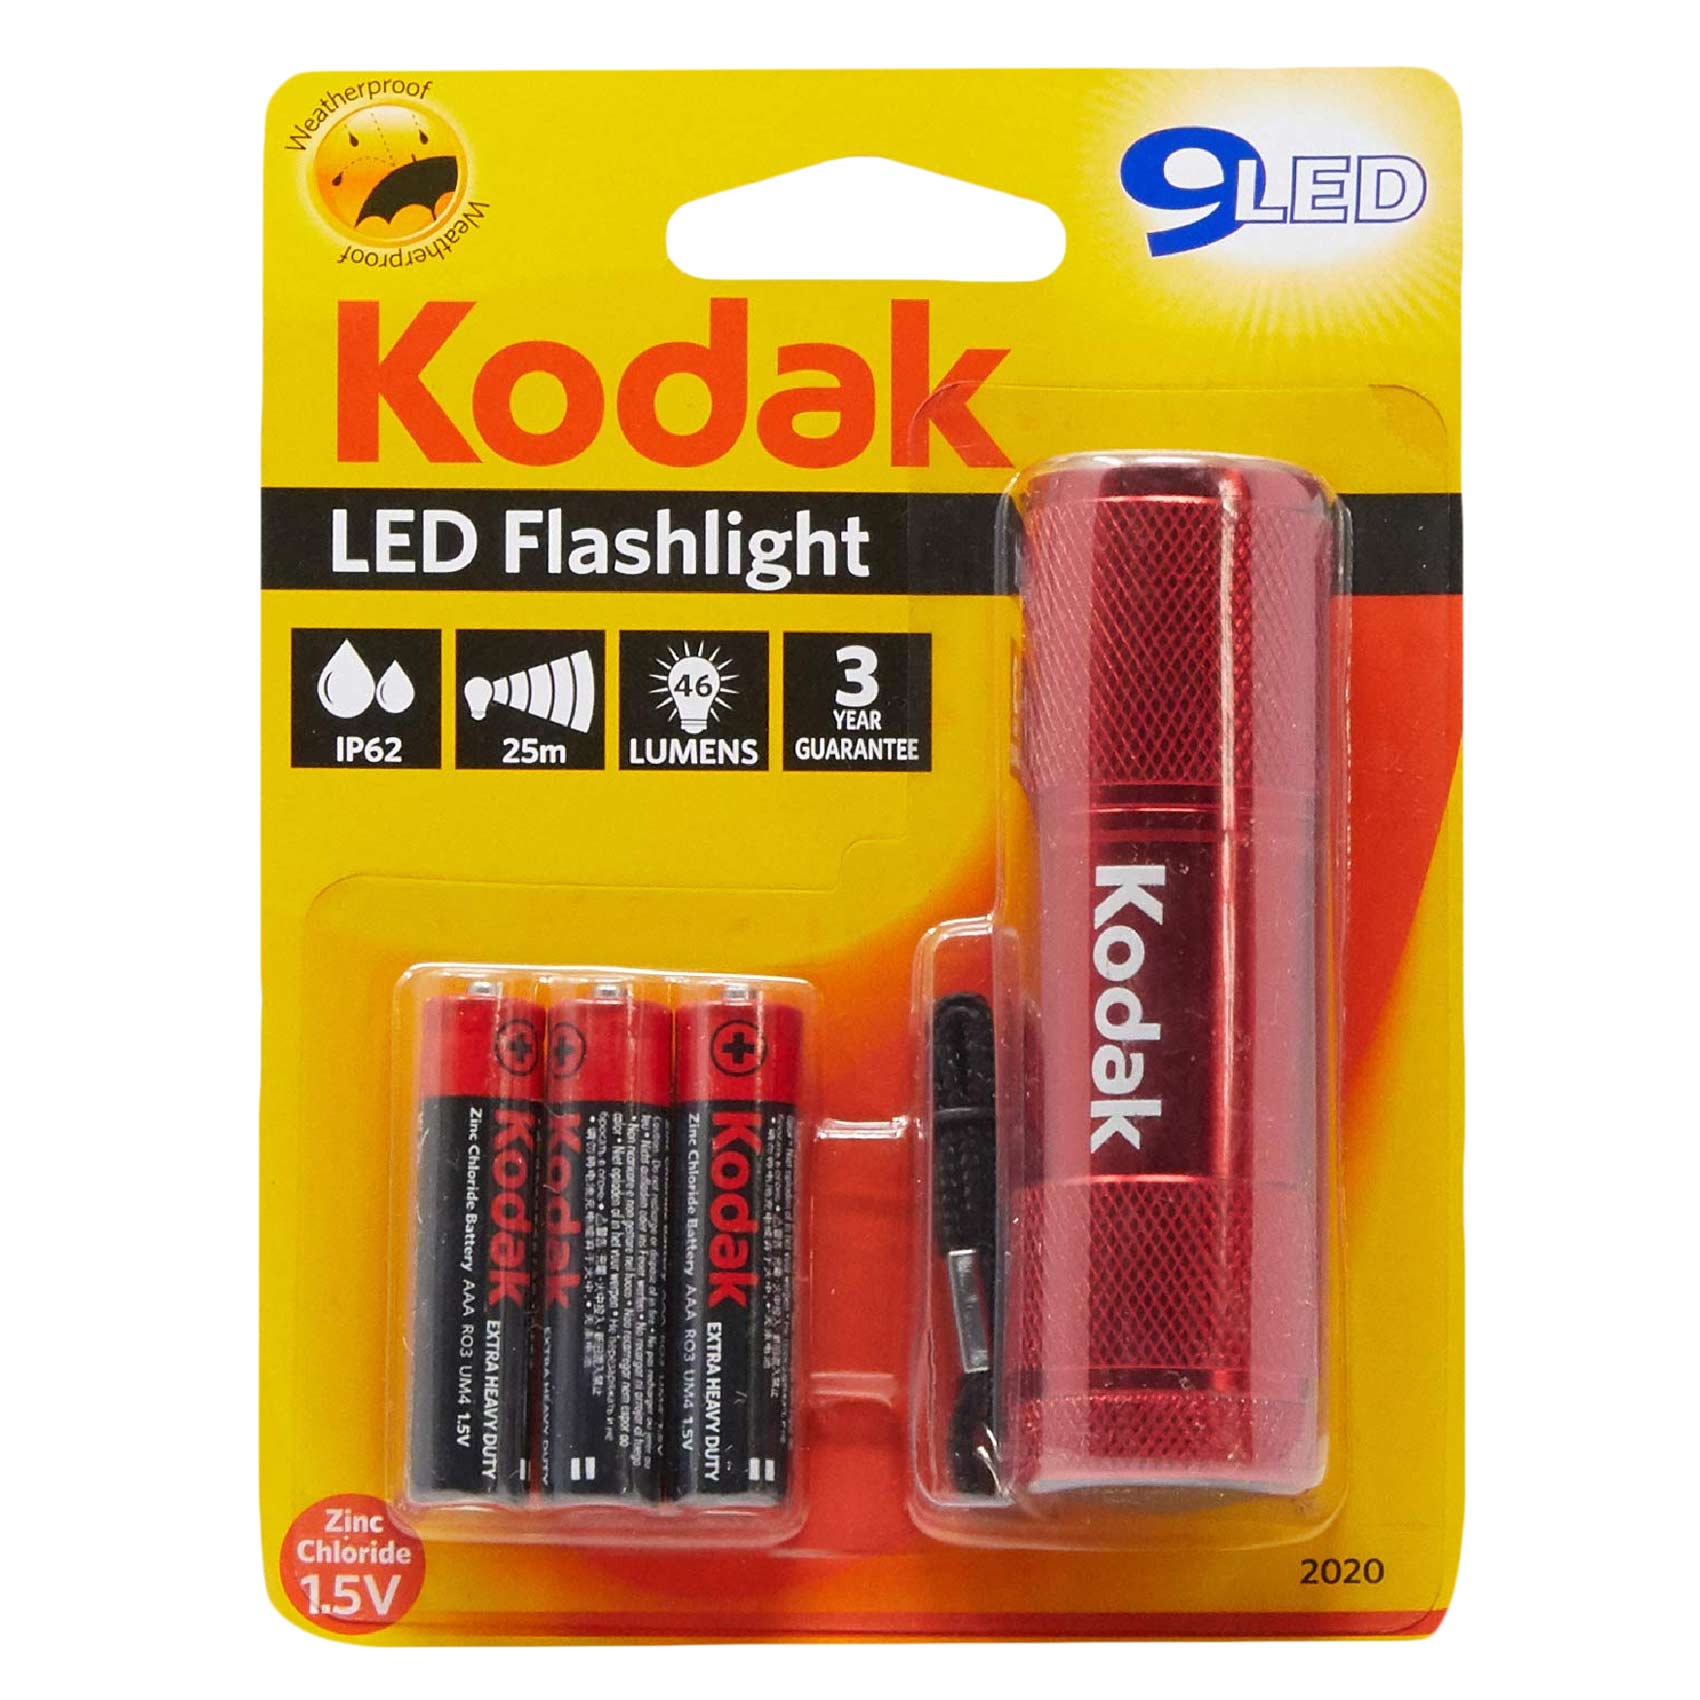 Kodak 9 LED Flashlight Red